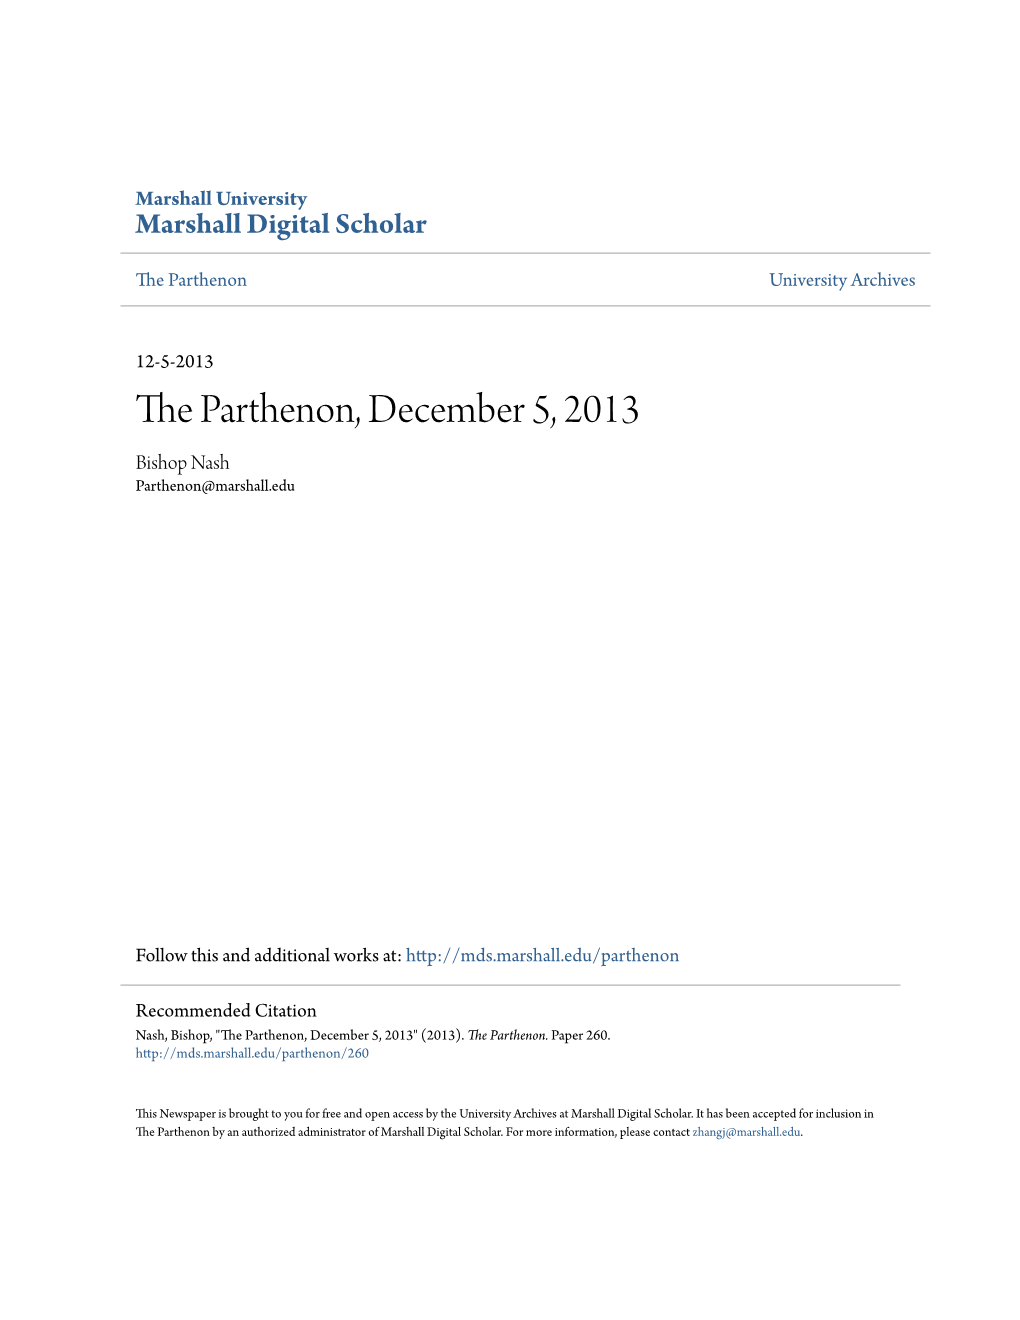 The Parthenon, December 5, 2013